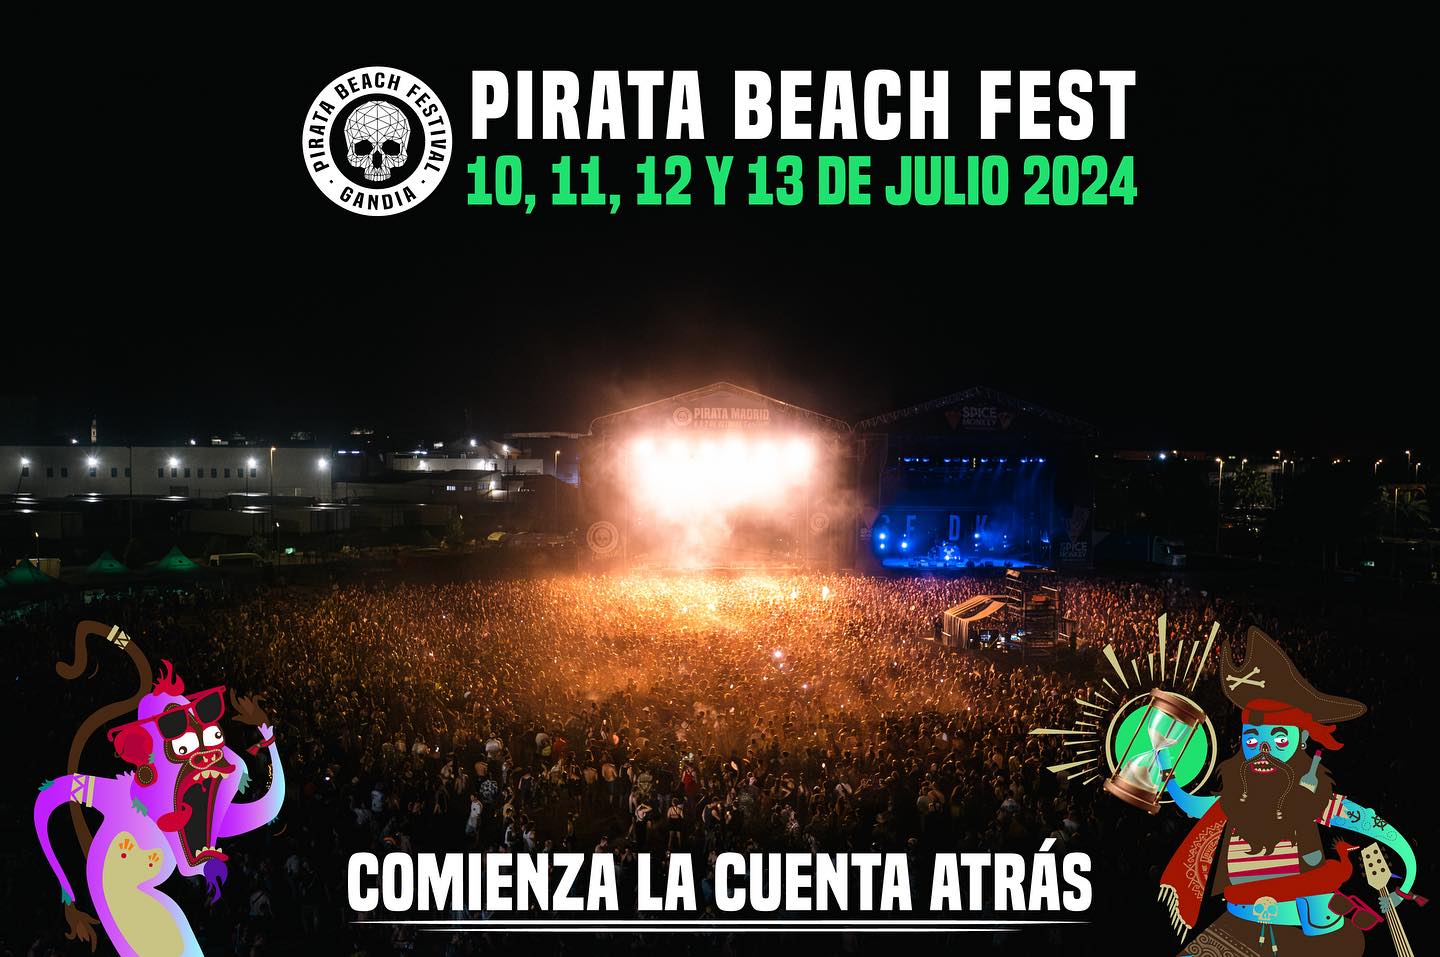 Pirata Beach Fest